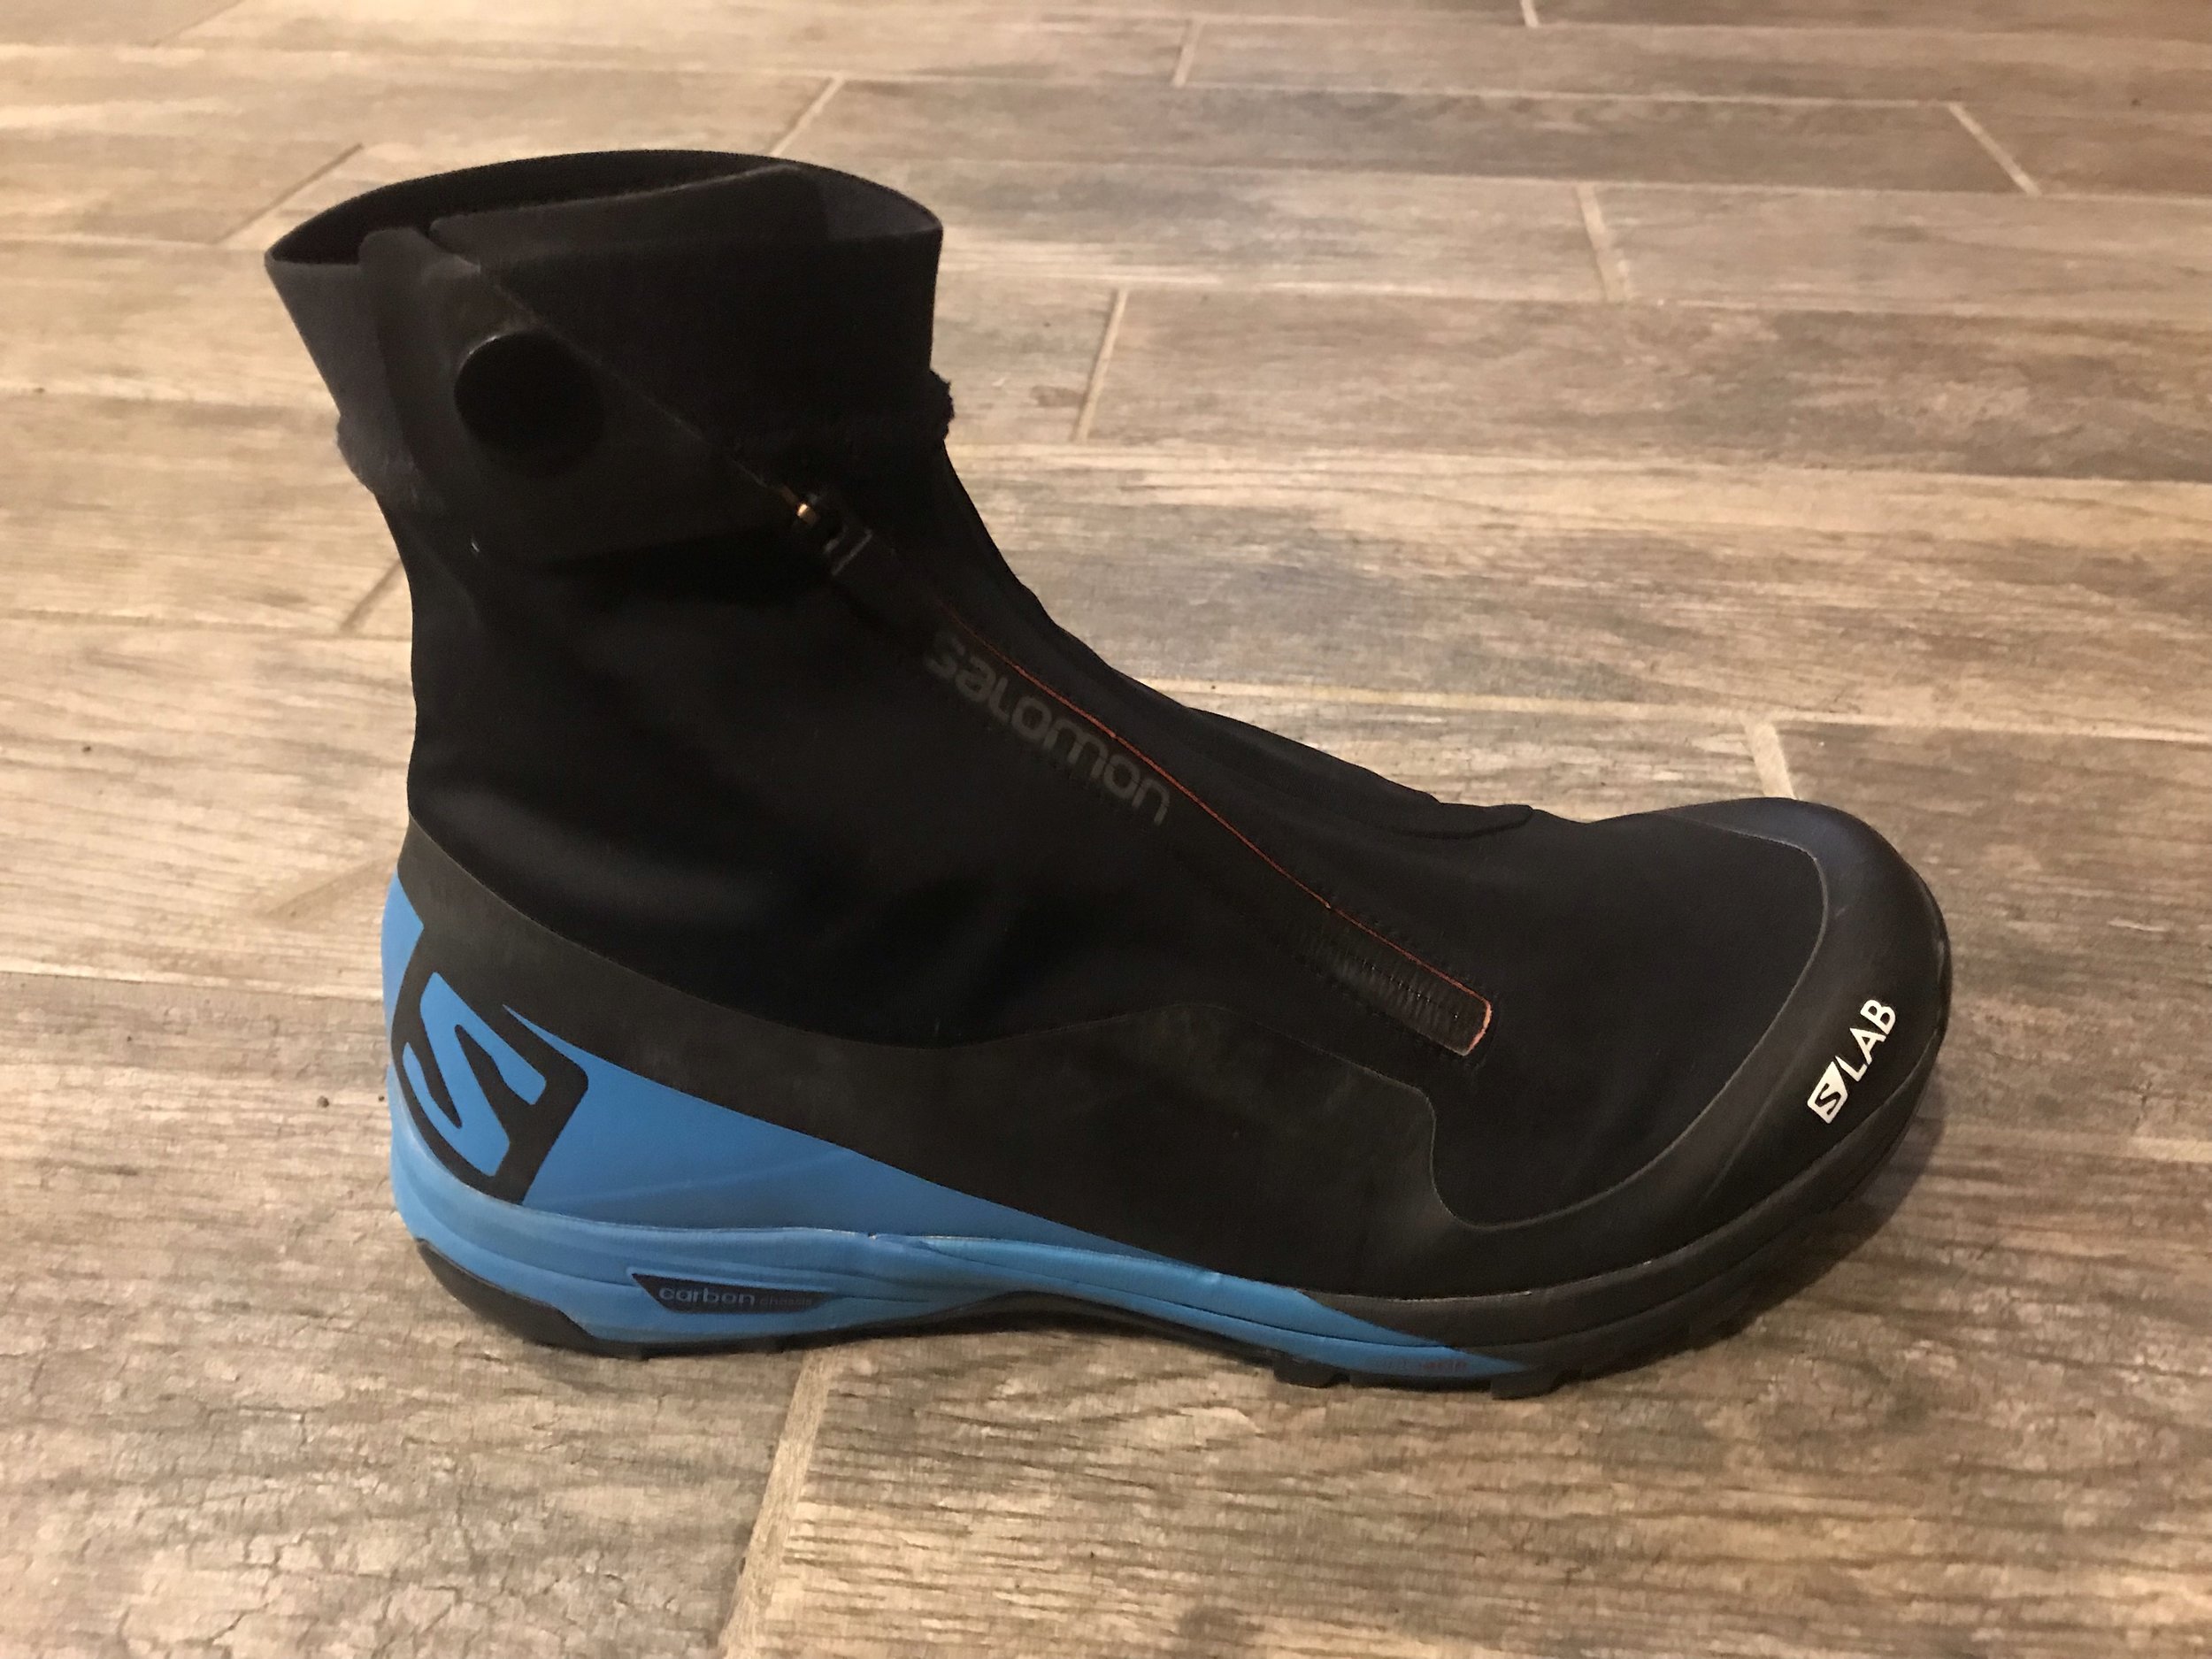 Salomon S/LAB XA Alpine 2 Shoe Review — Mountain Peak Fitness